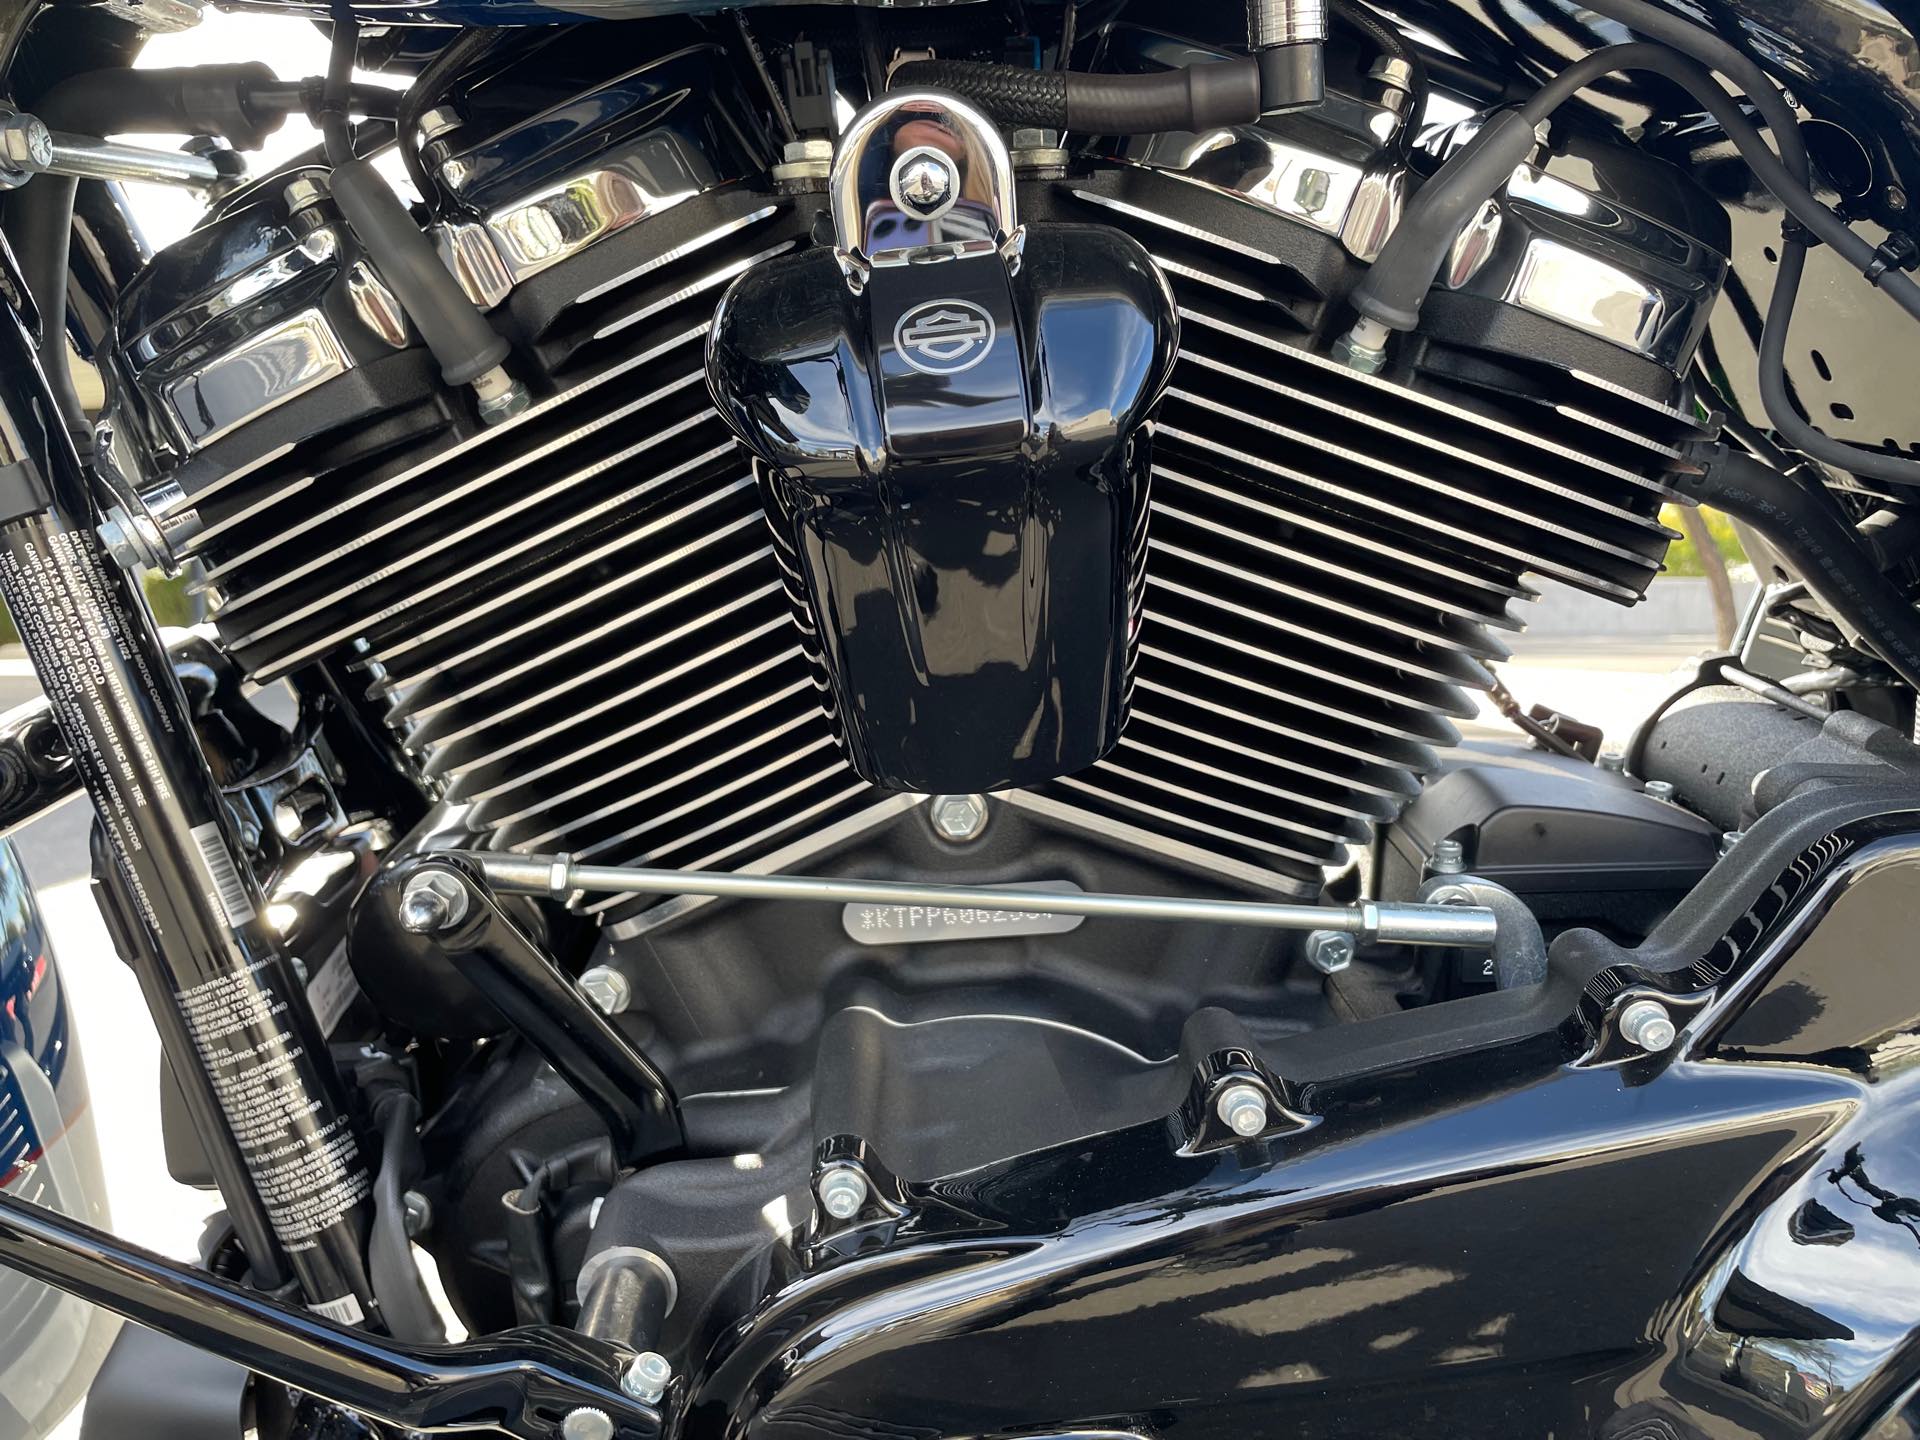 2023 Harley-Davidson Road Glide Special at Buddy Stubbs Arizona Harley-Davidson